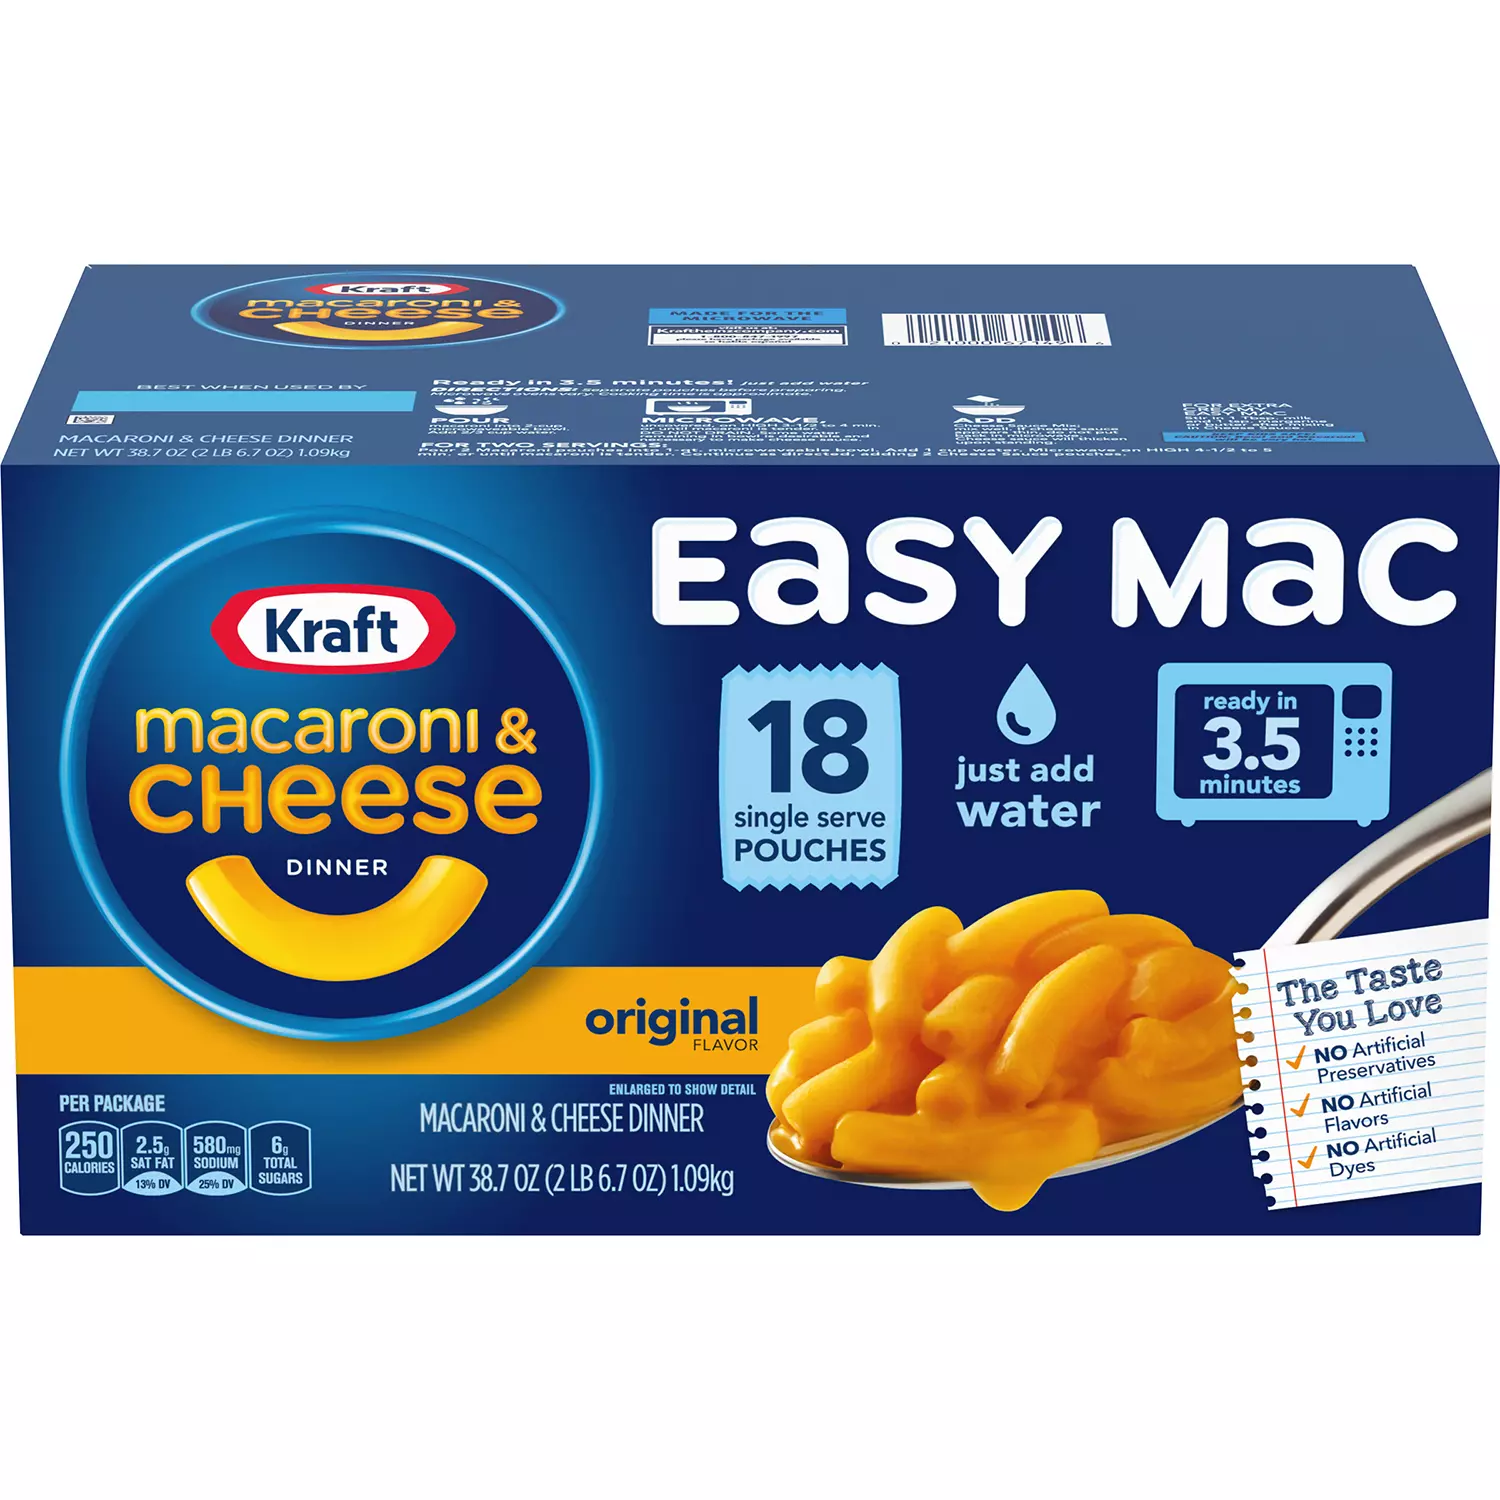 Kraft Easy Mac Original Flavor Single-Serve Pouches (18 pk.)